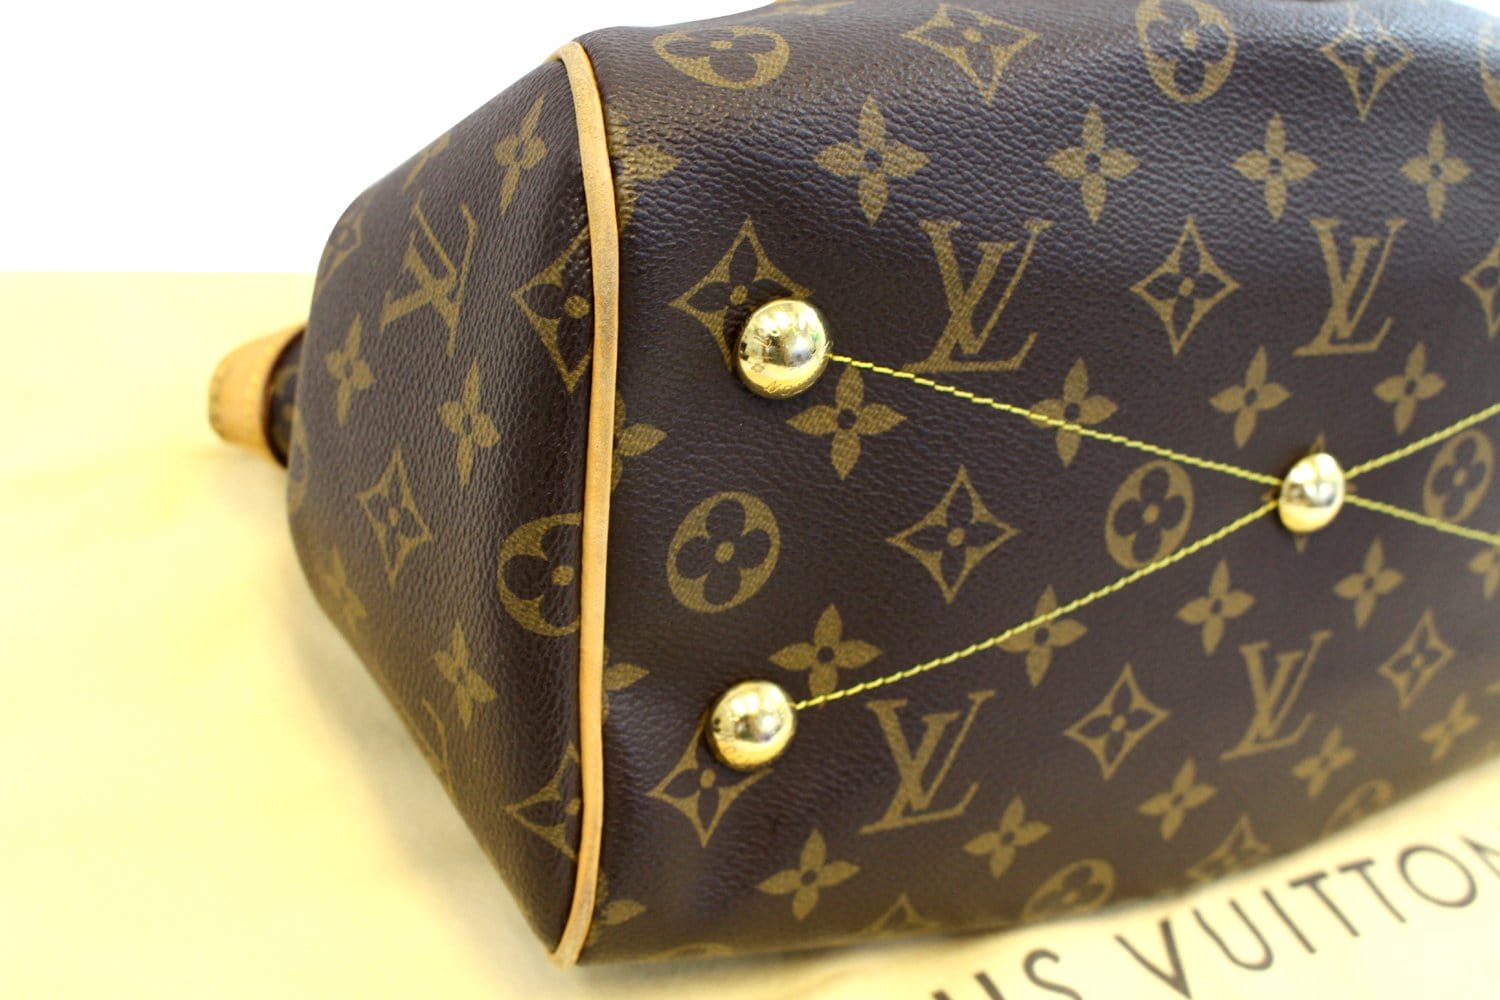 Louis Vuitton Monogram Tivoli PM (AR1098)(2008) Authentic Handbag